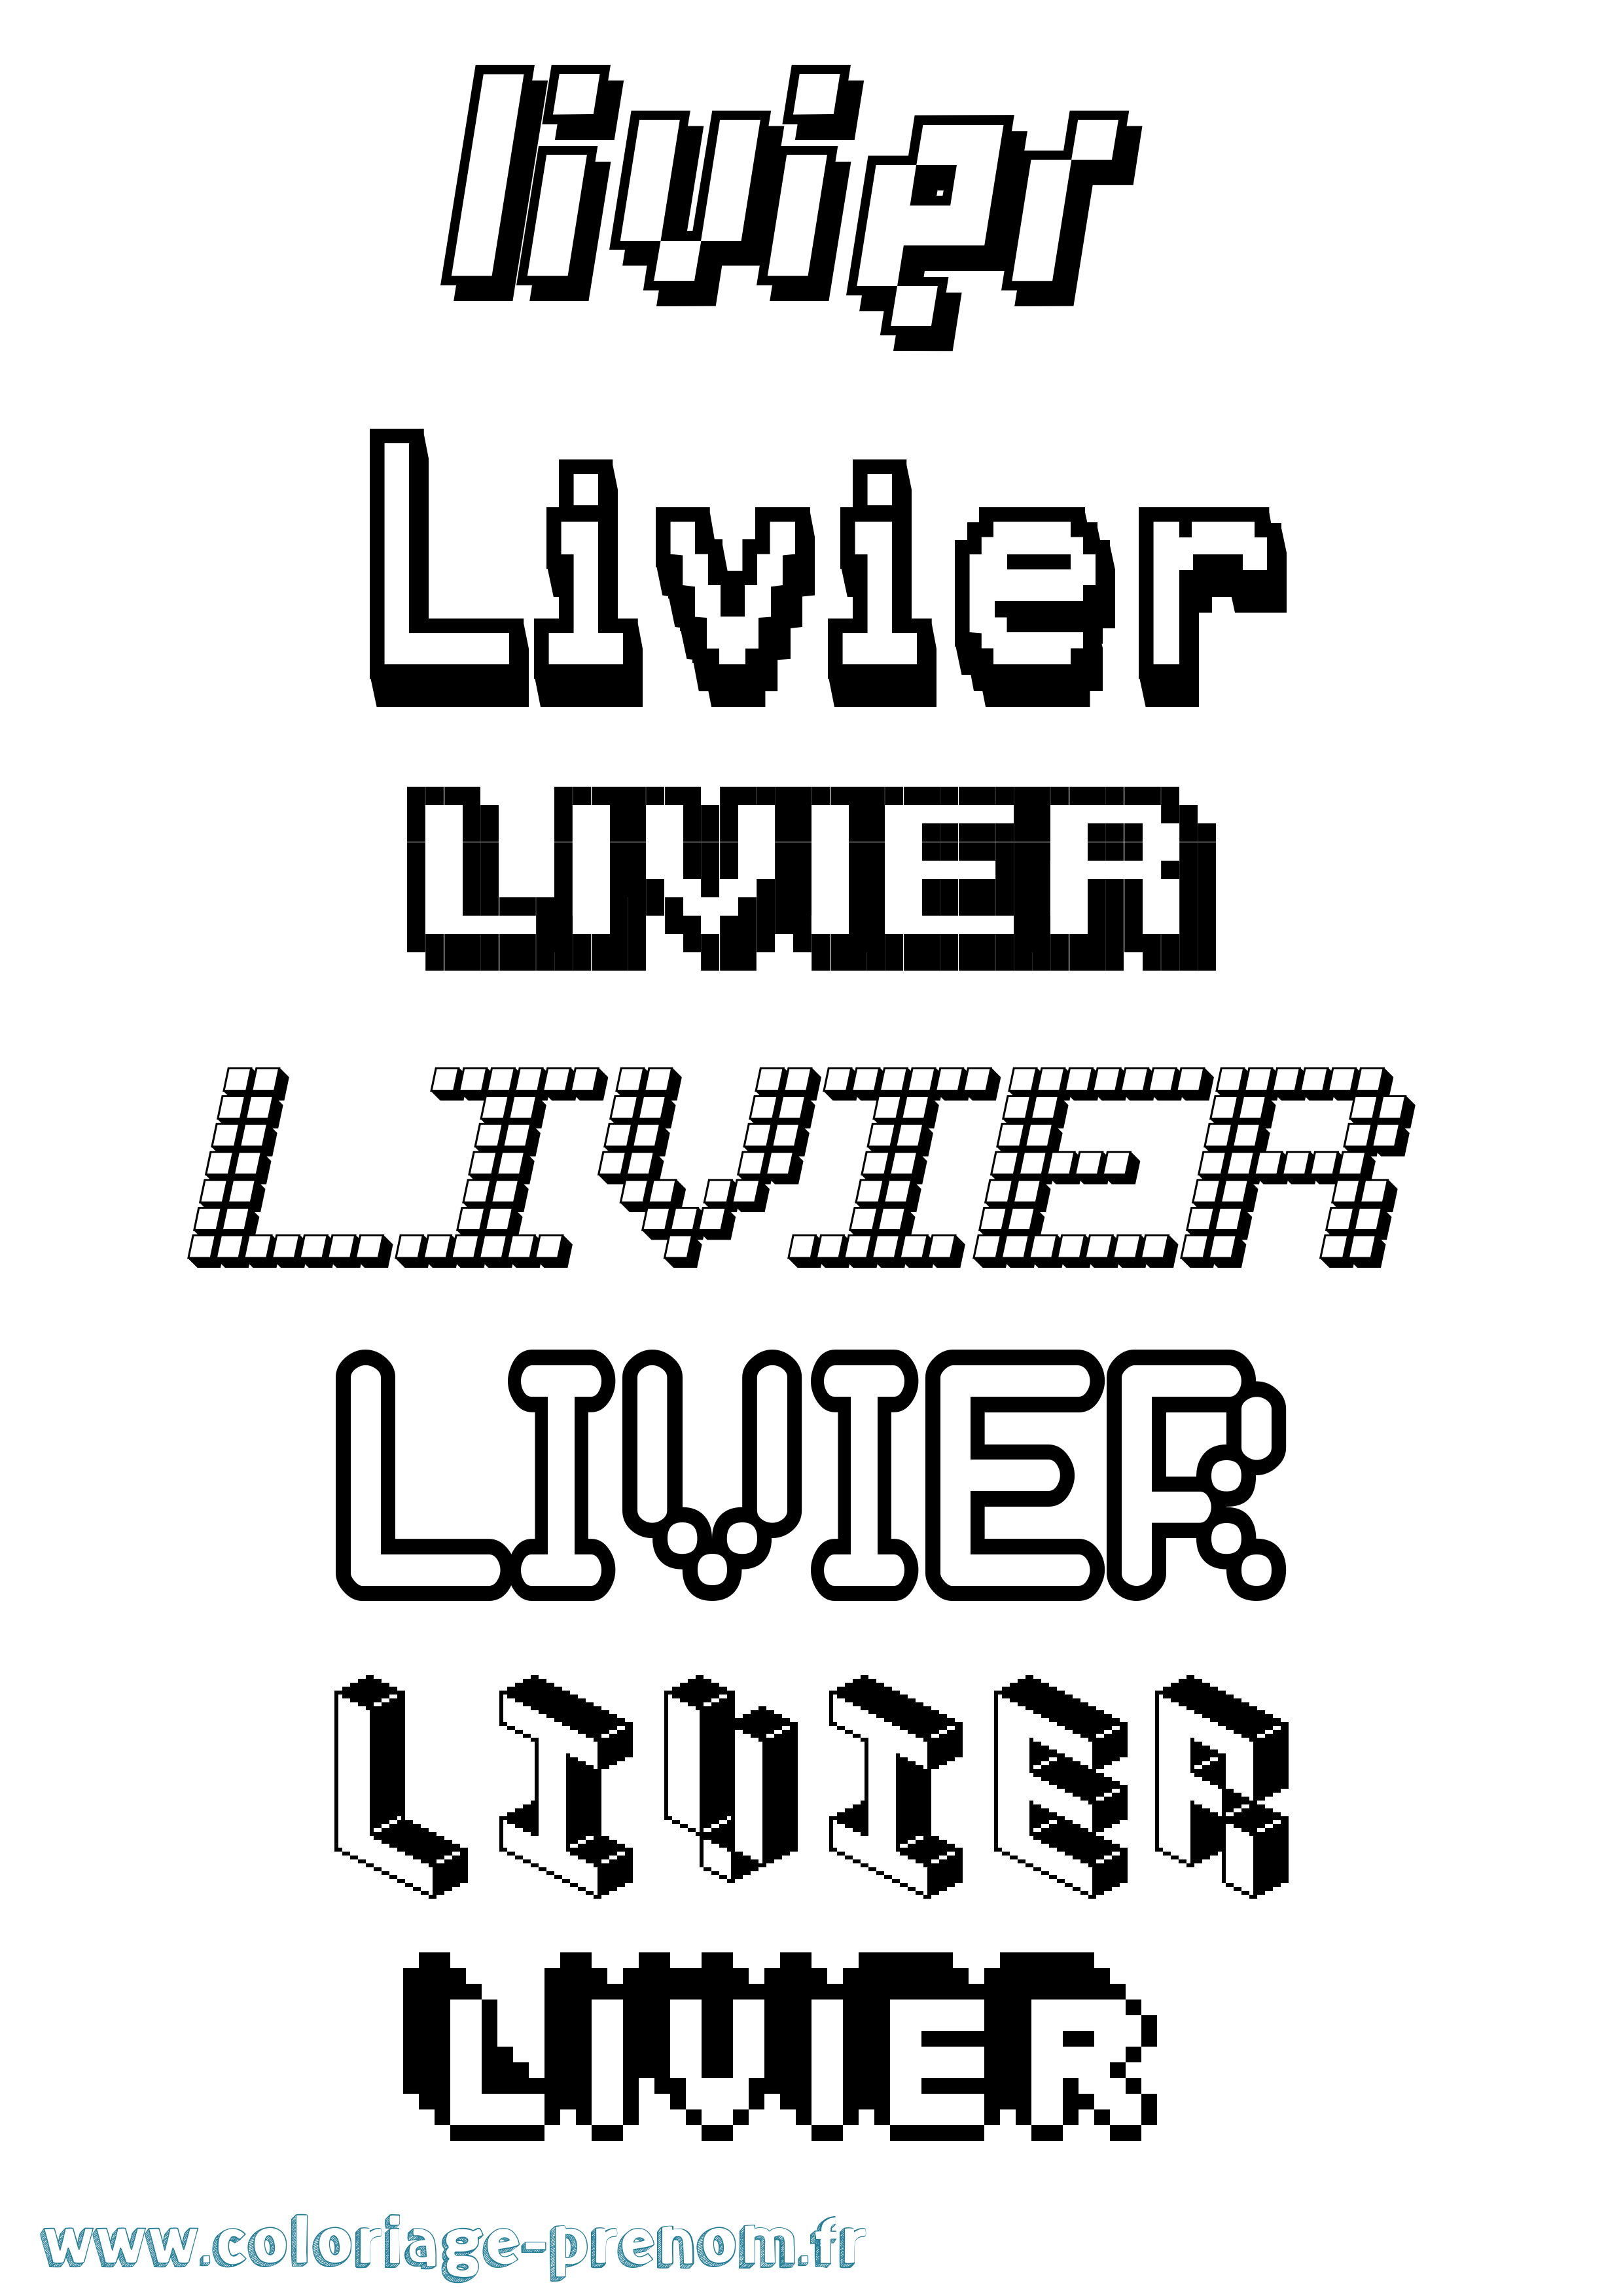 Coloriage prénom Livier Pixel